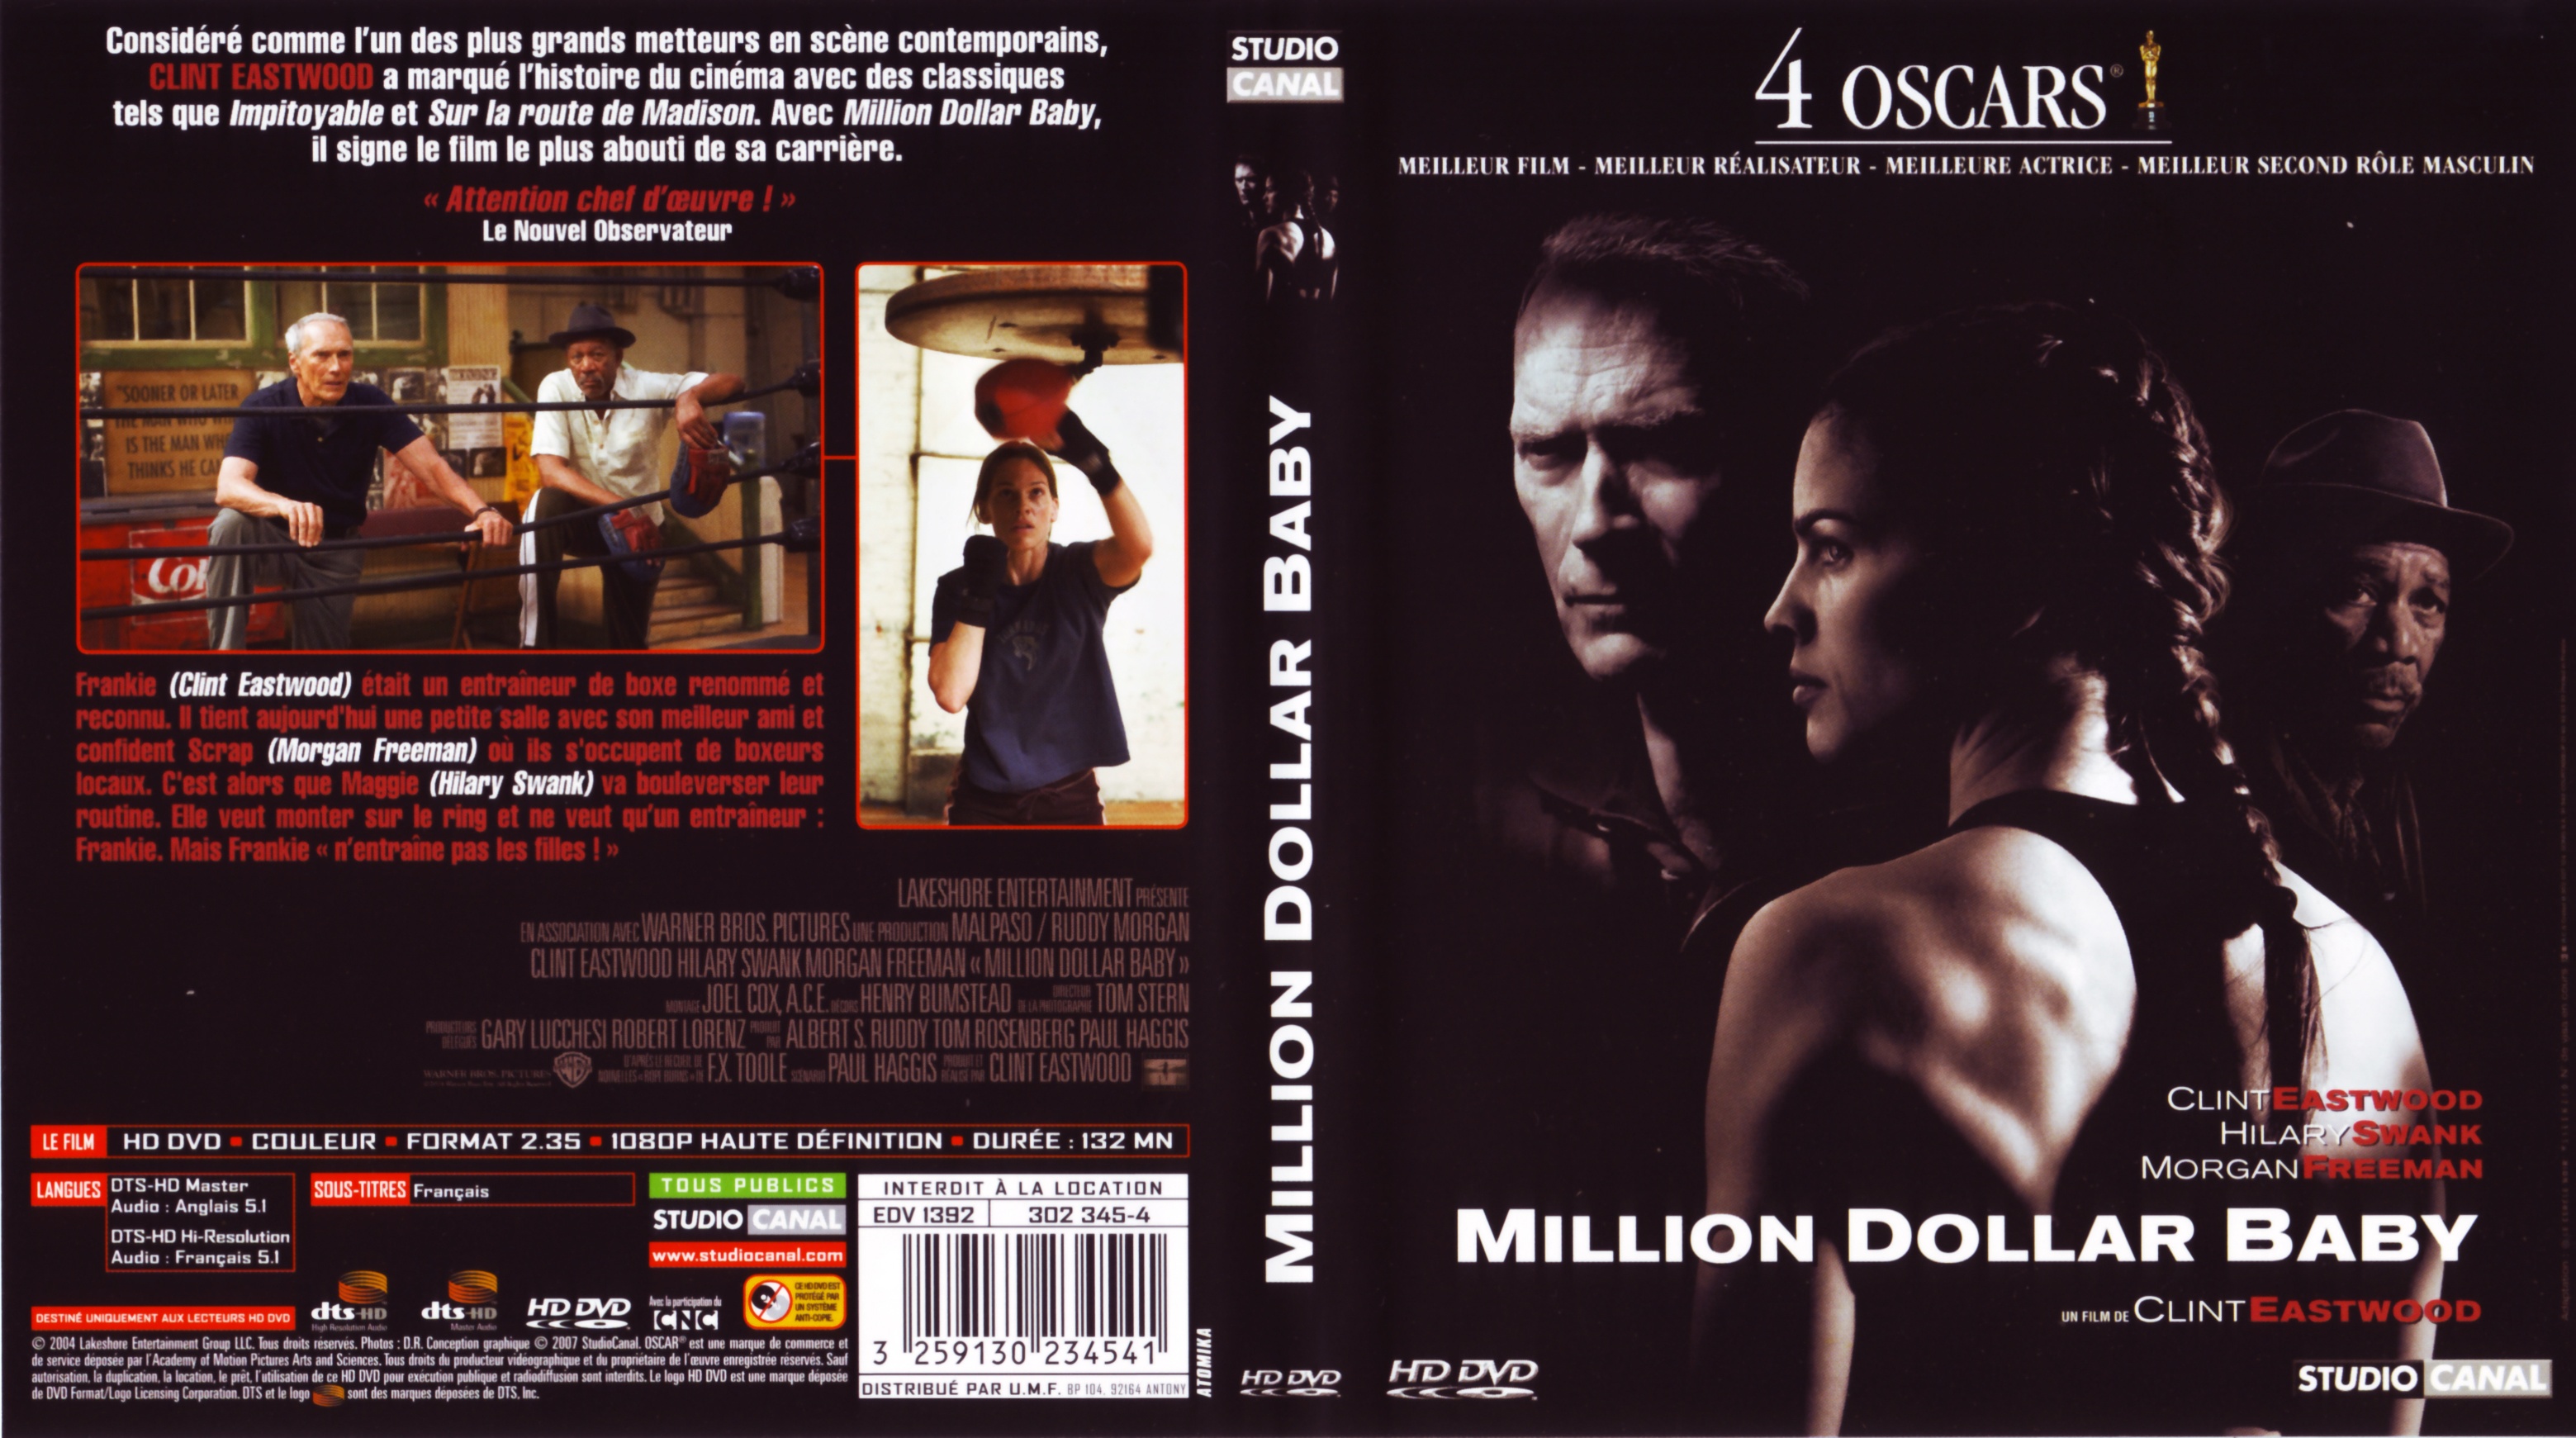 Jaquette DVD Million dollar baby (HD-DVD)